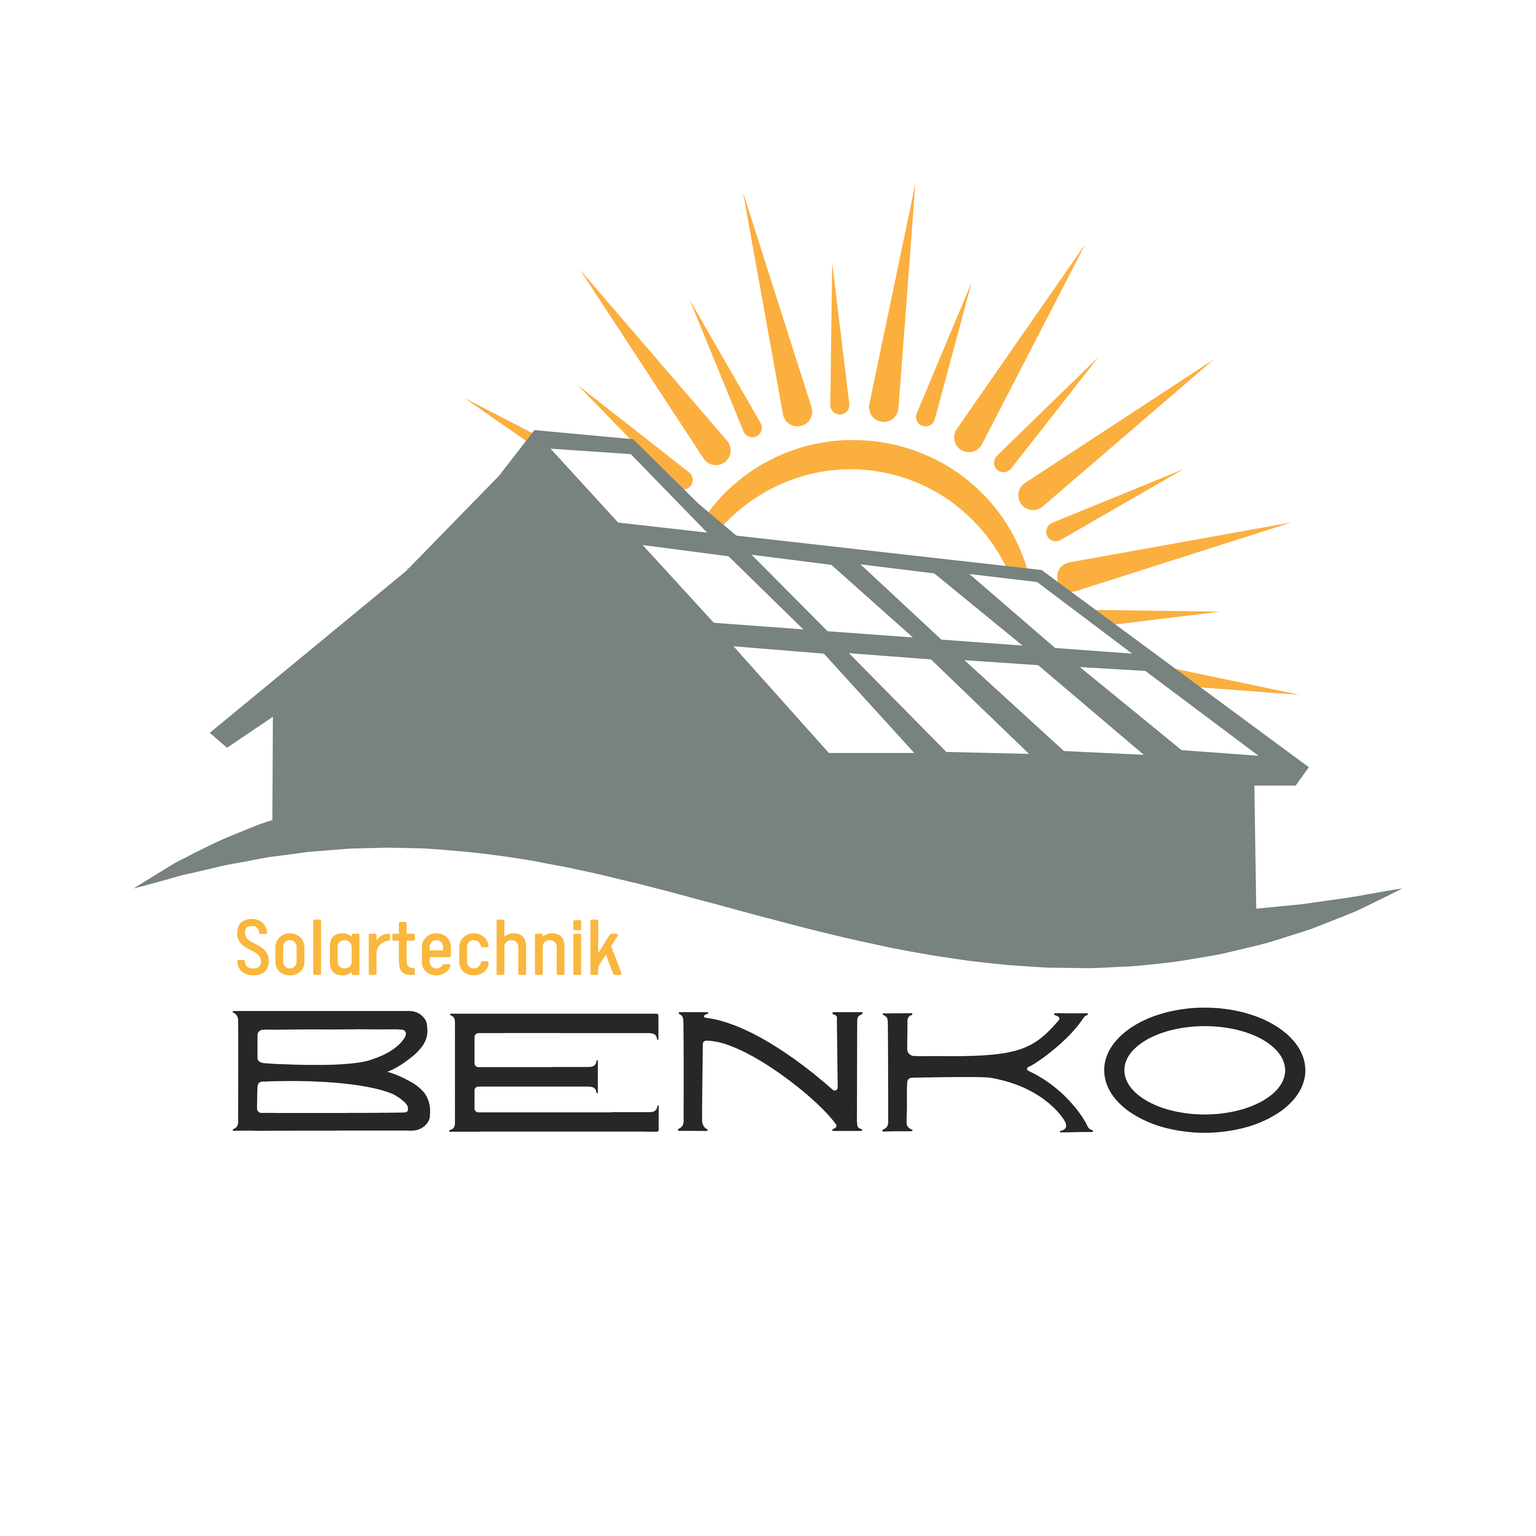 Benko Solartechnik